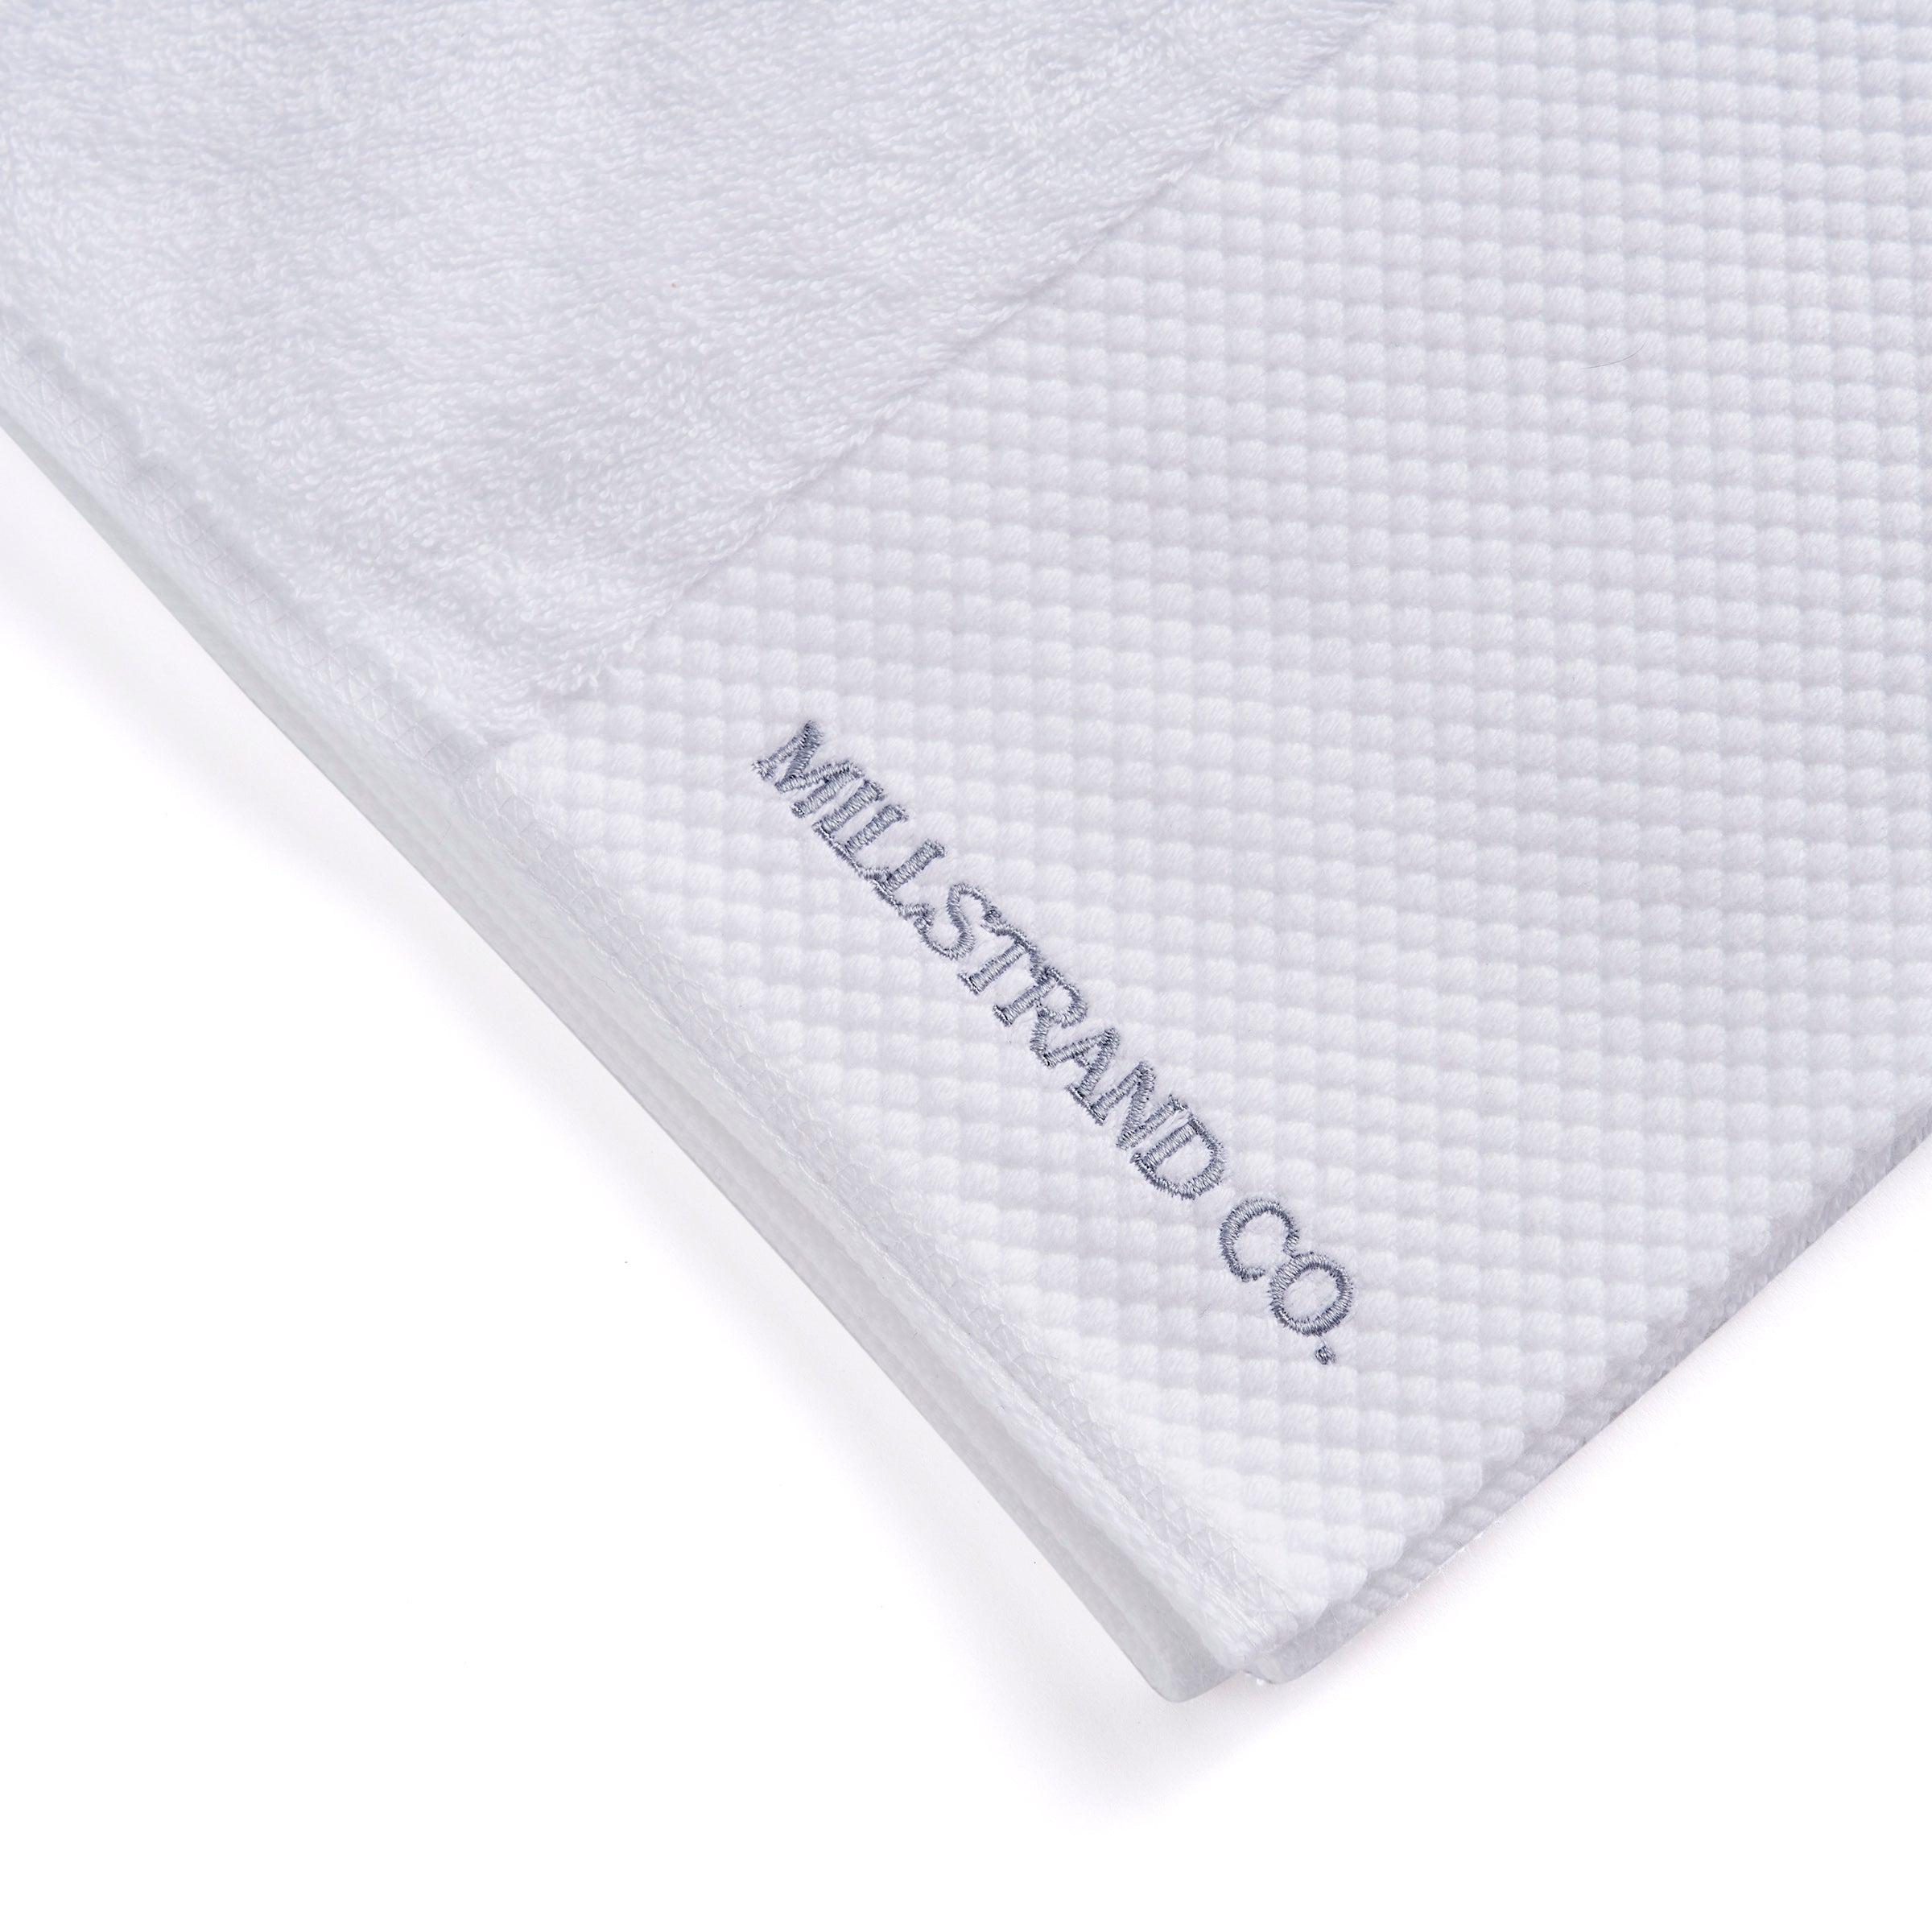 Millstrand Co. Lana Hand Towel Set in Slate Grey